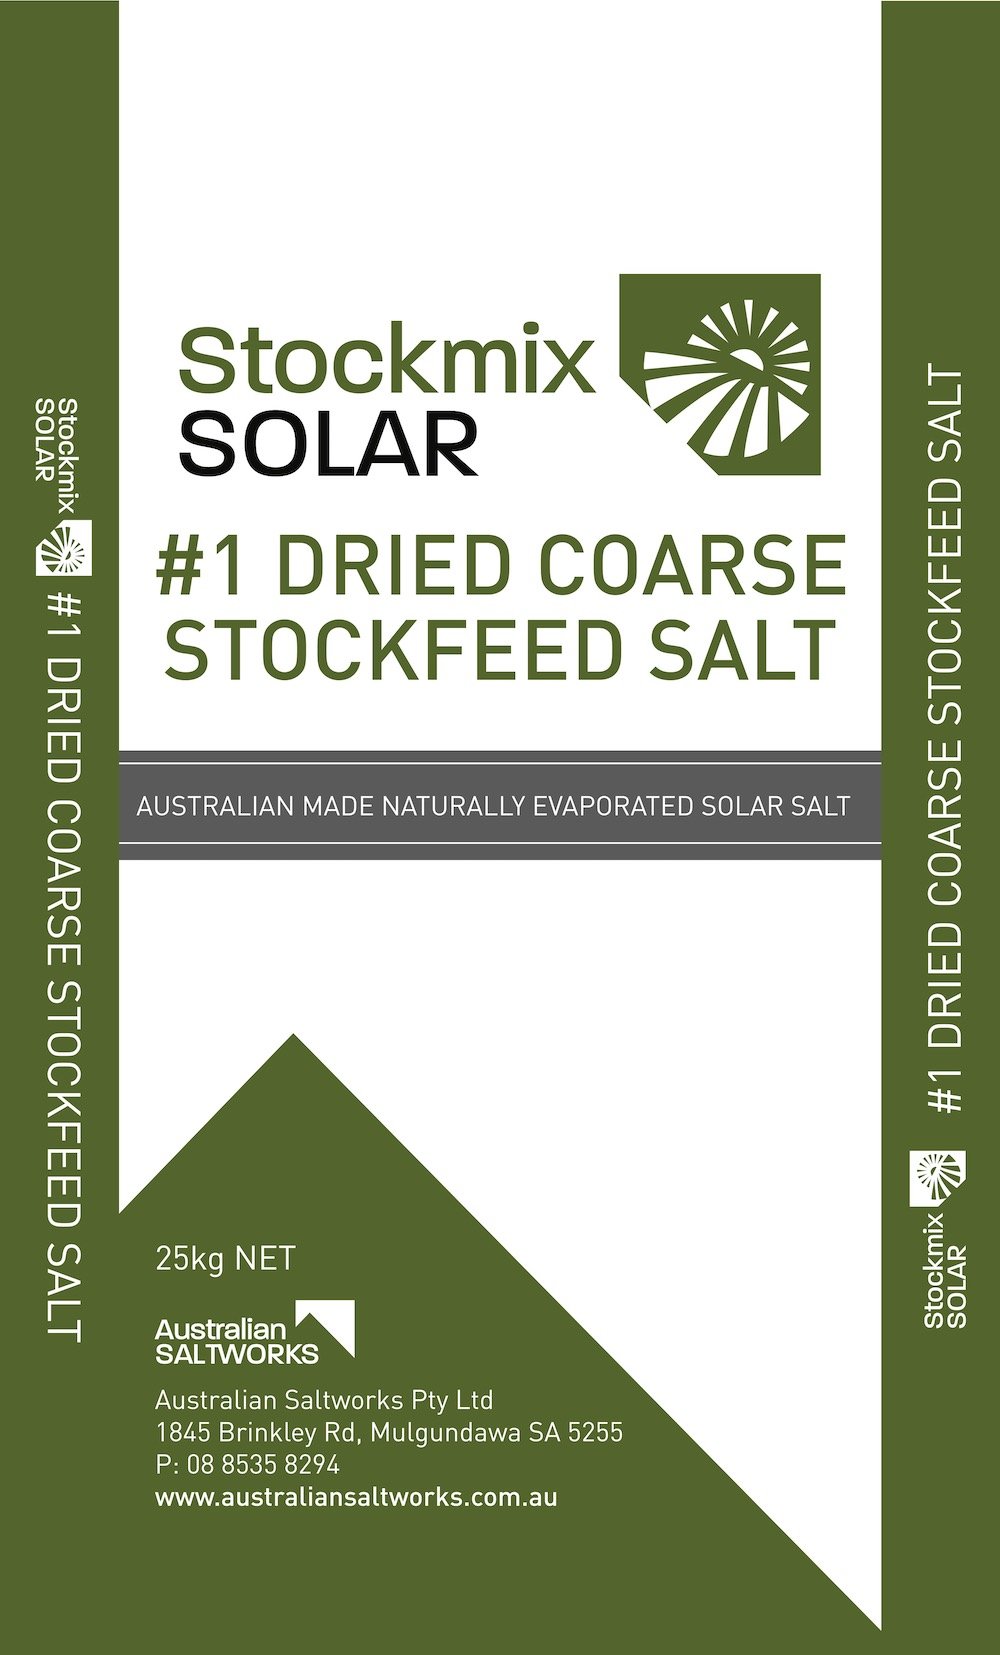 Stockmix Solar 1 Dried Coarse Stockfeed Salt.jpg